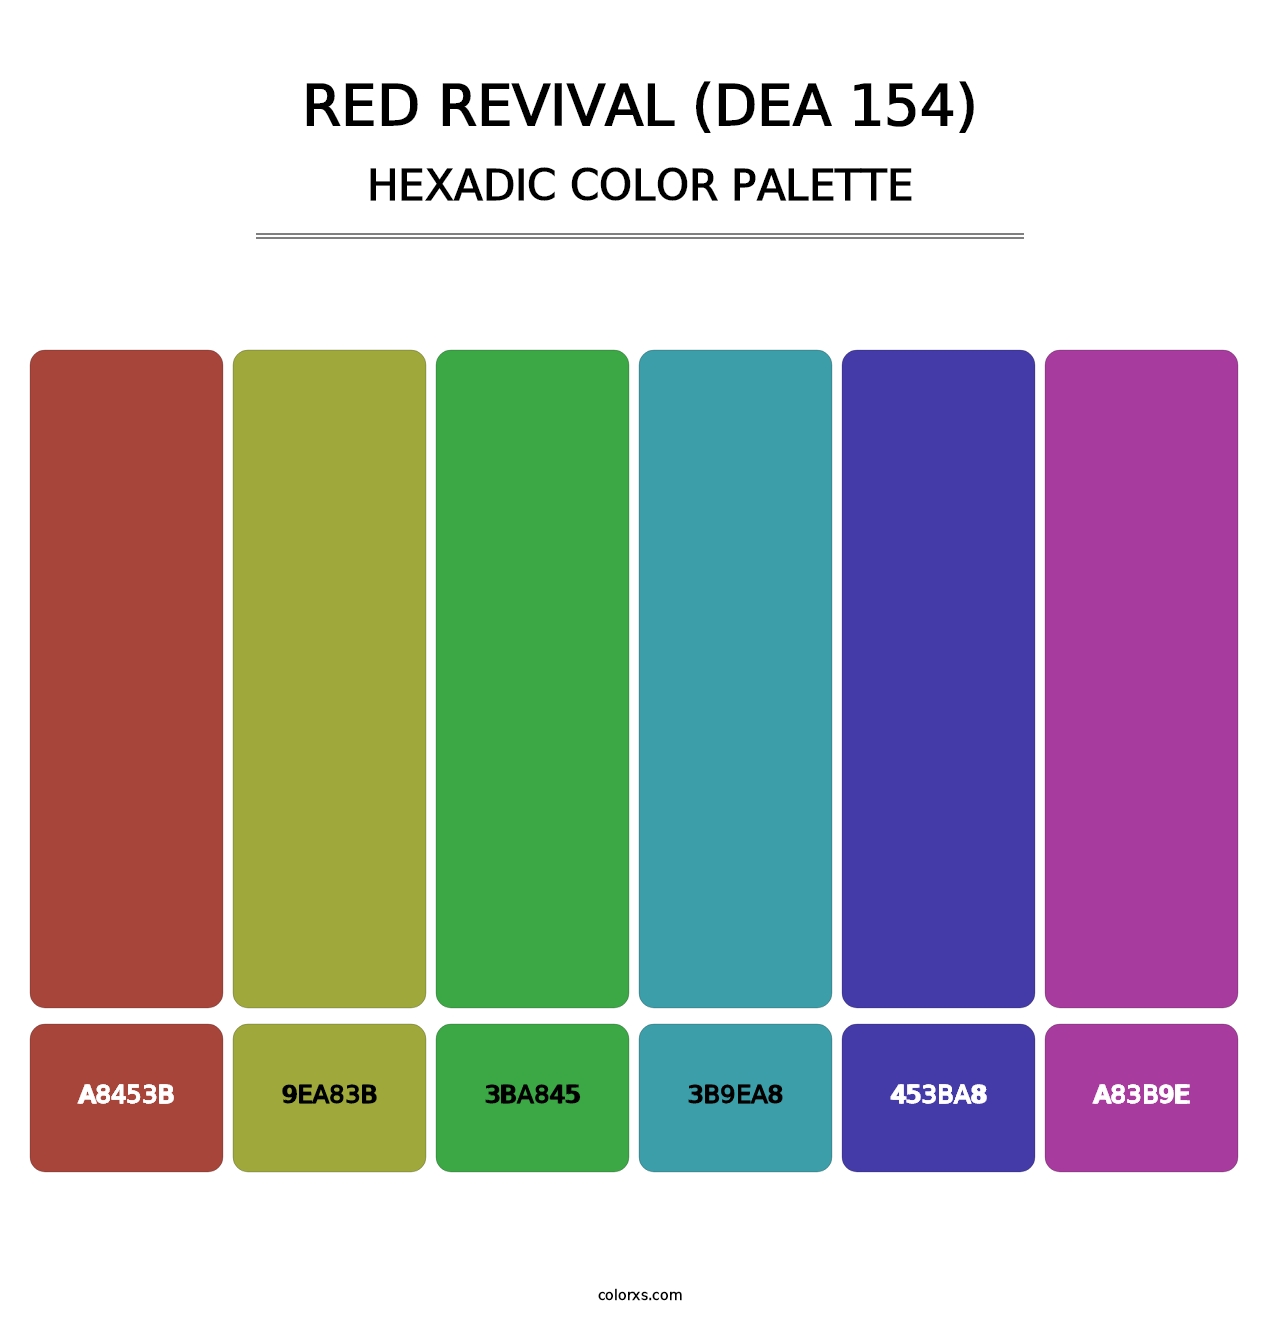 Red Revival (DEA 154) - Hexadic Color Palette